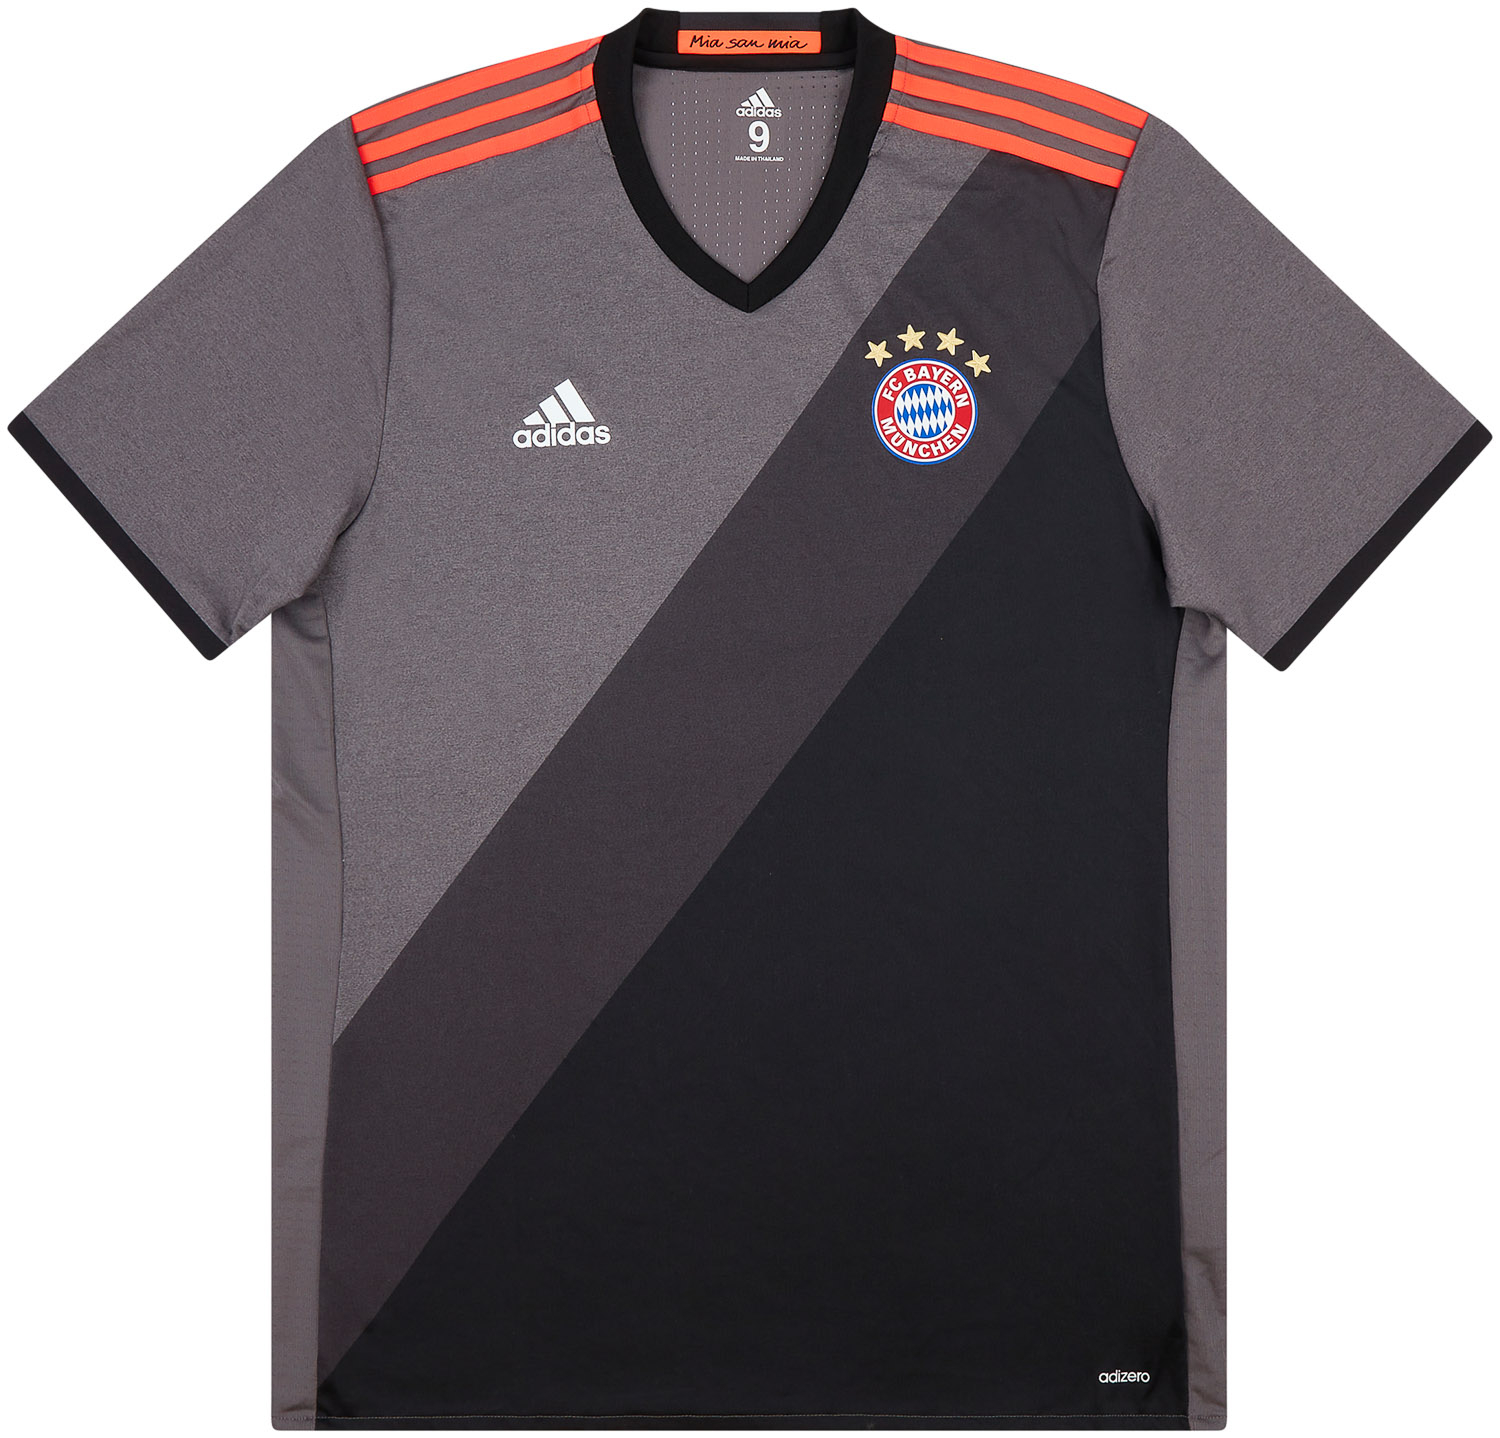 kloof Kalmte Doordeweekse dagen 2016-17 Bayern Munich Player Issue Away Shirt (Excellent) L/XL